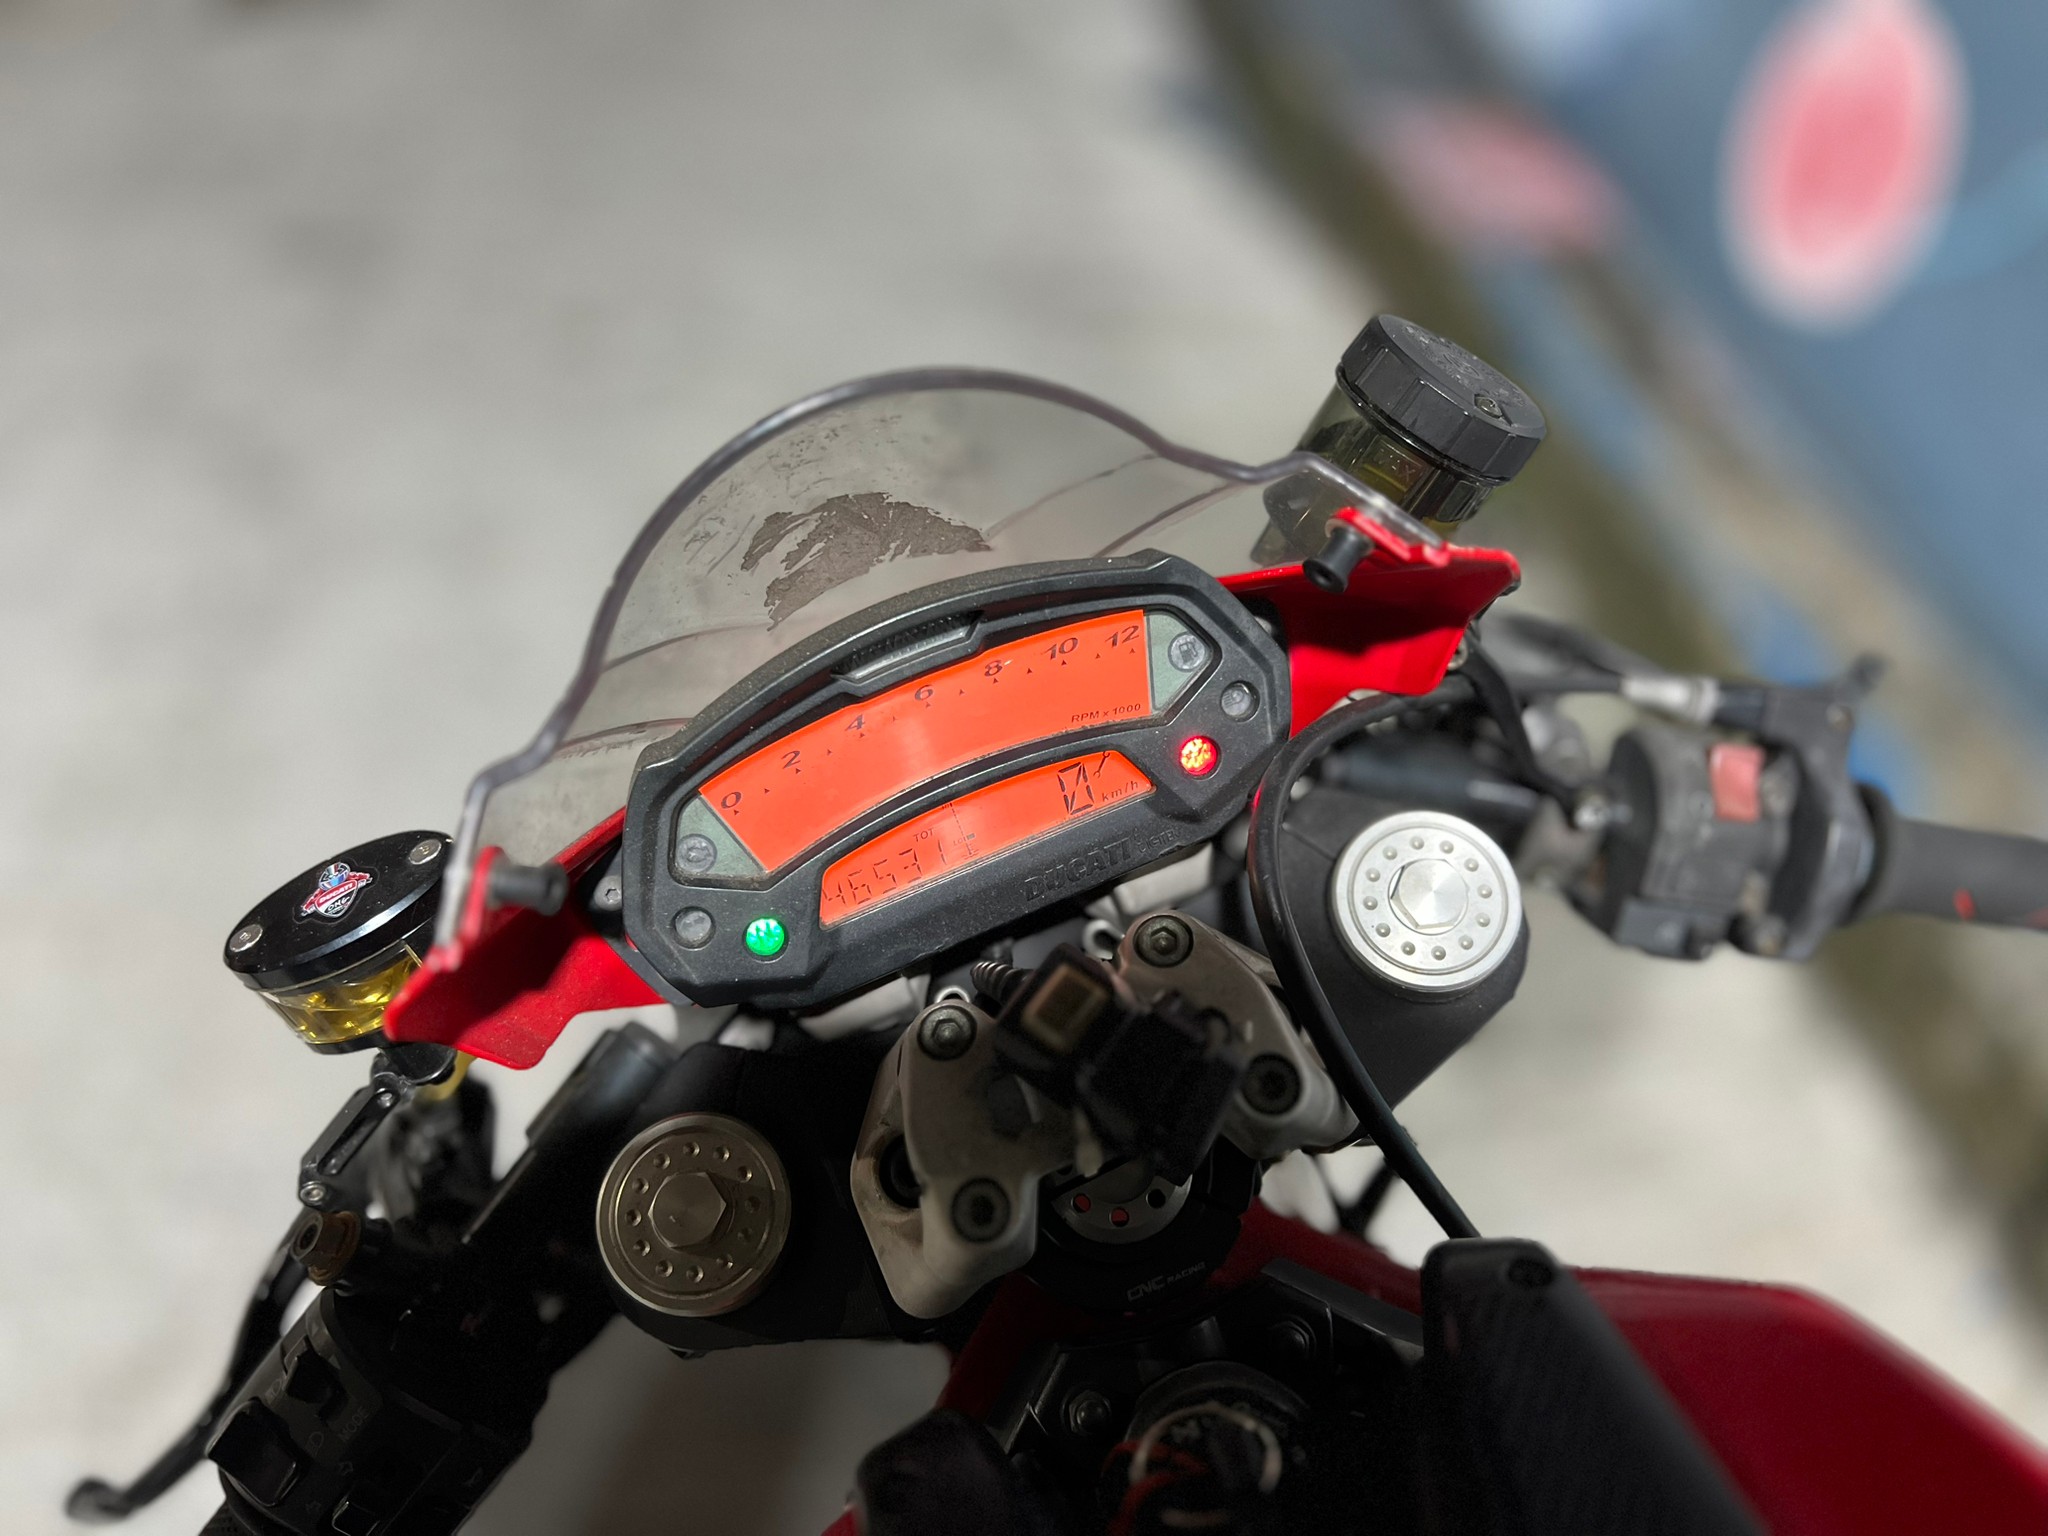 DUCATI MONSTER696 - 中古/二手車出售中 Ducati Monster 696 可分期 可車換車補貼差價 協助托運服務 LINE：@q0984380388 | 小菜輕重機